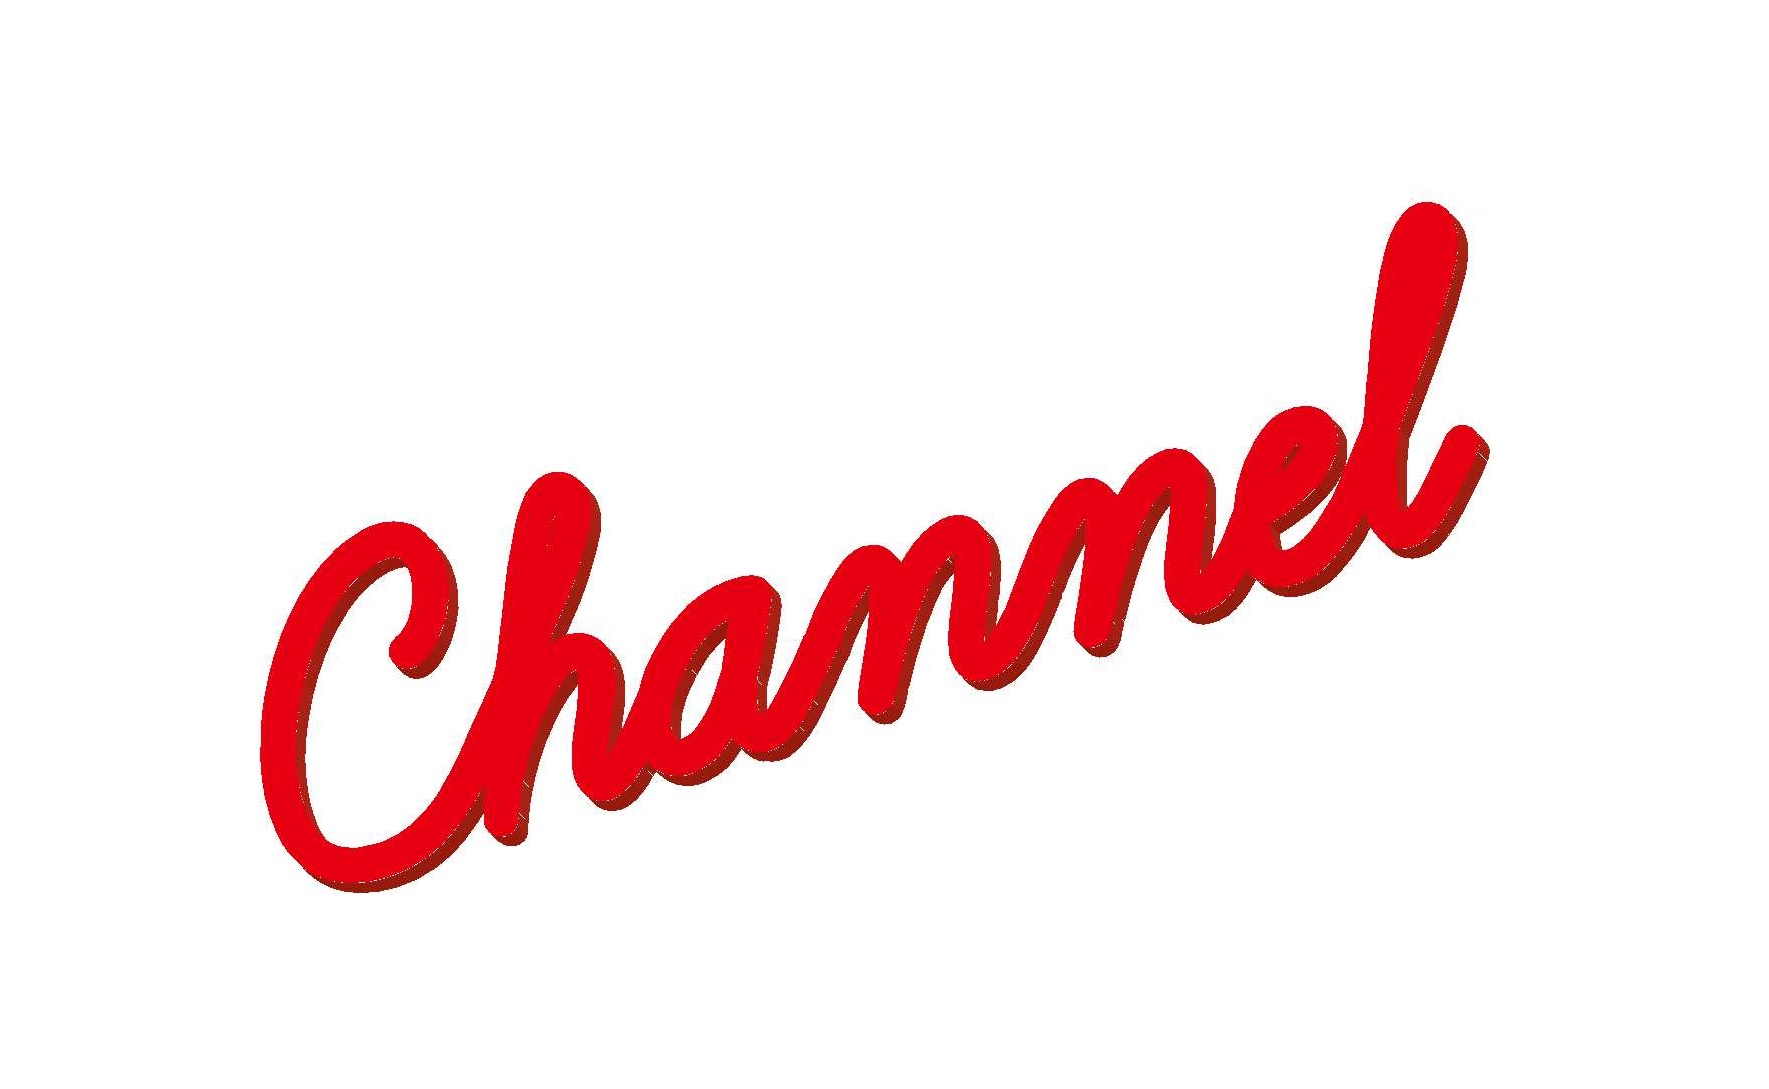 Channel.jpg